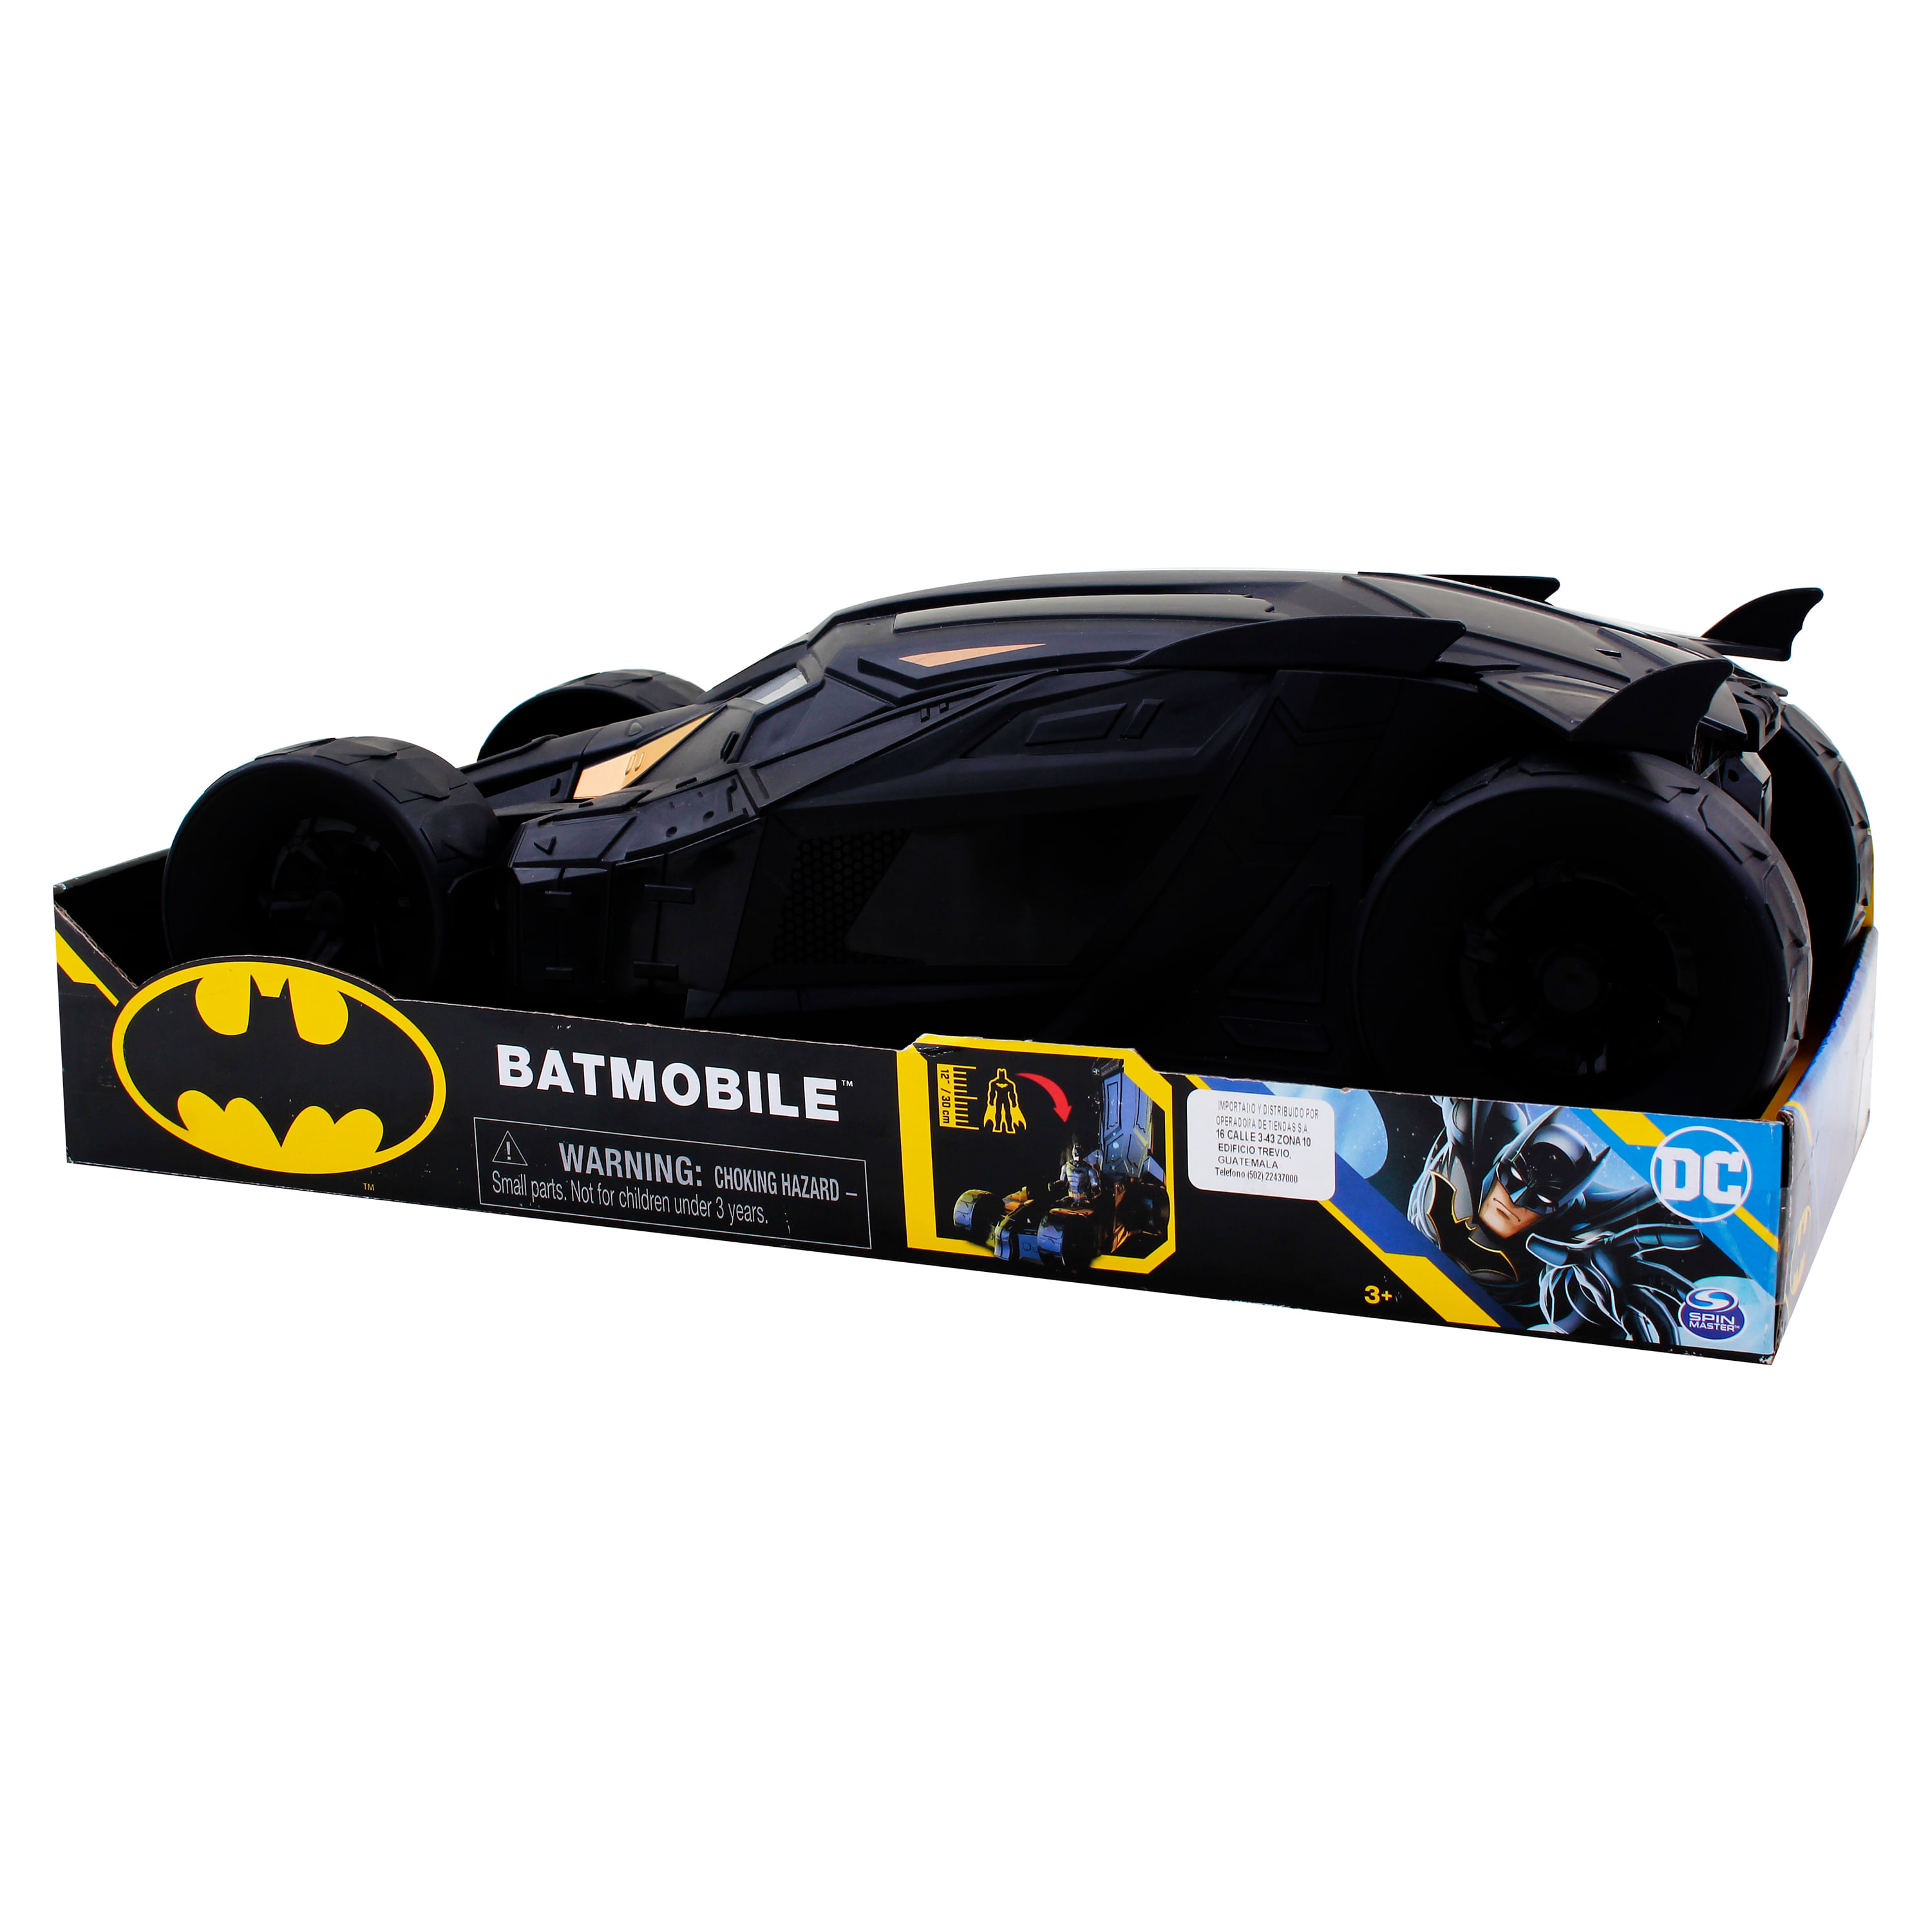 Comprar Vehiculo Batimovil Batman | Walmart Honduras